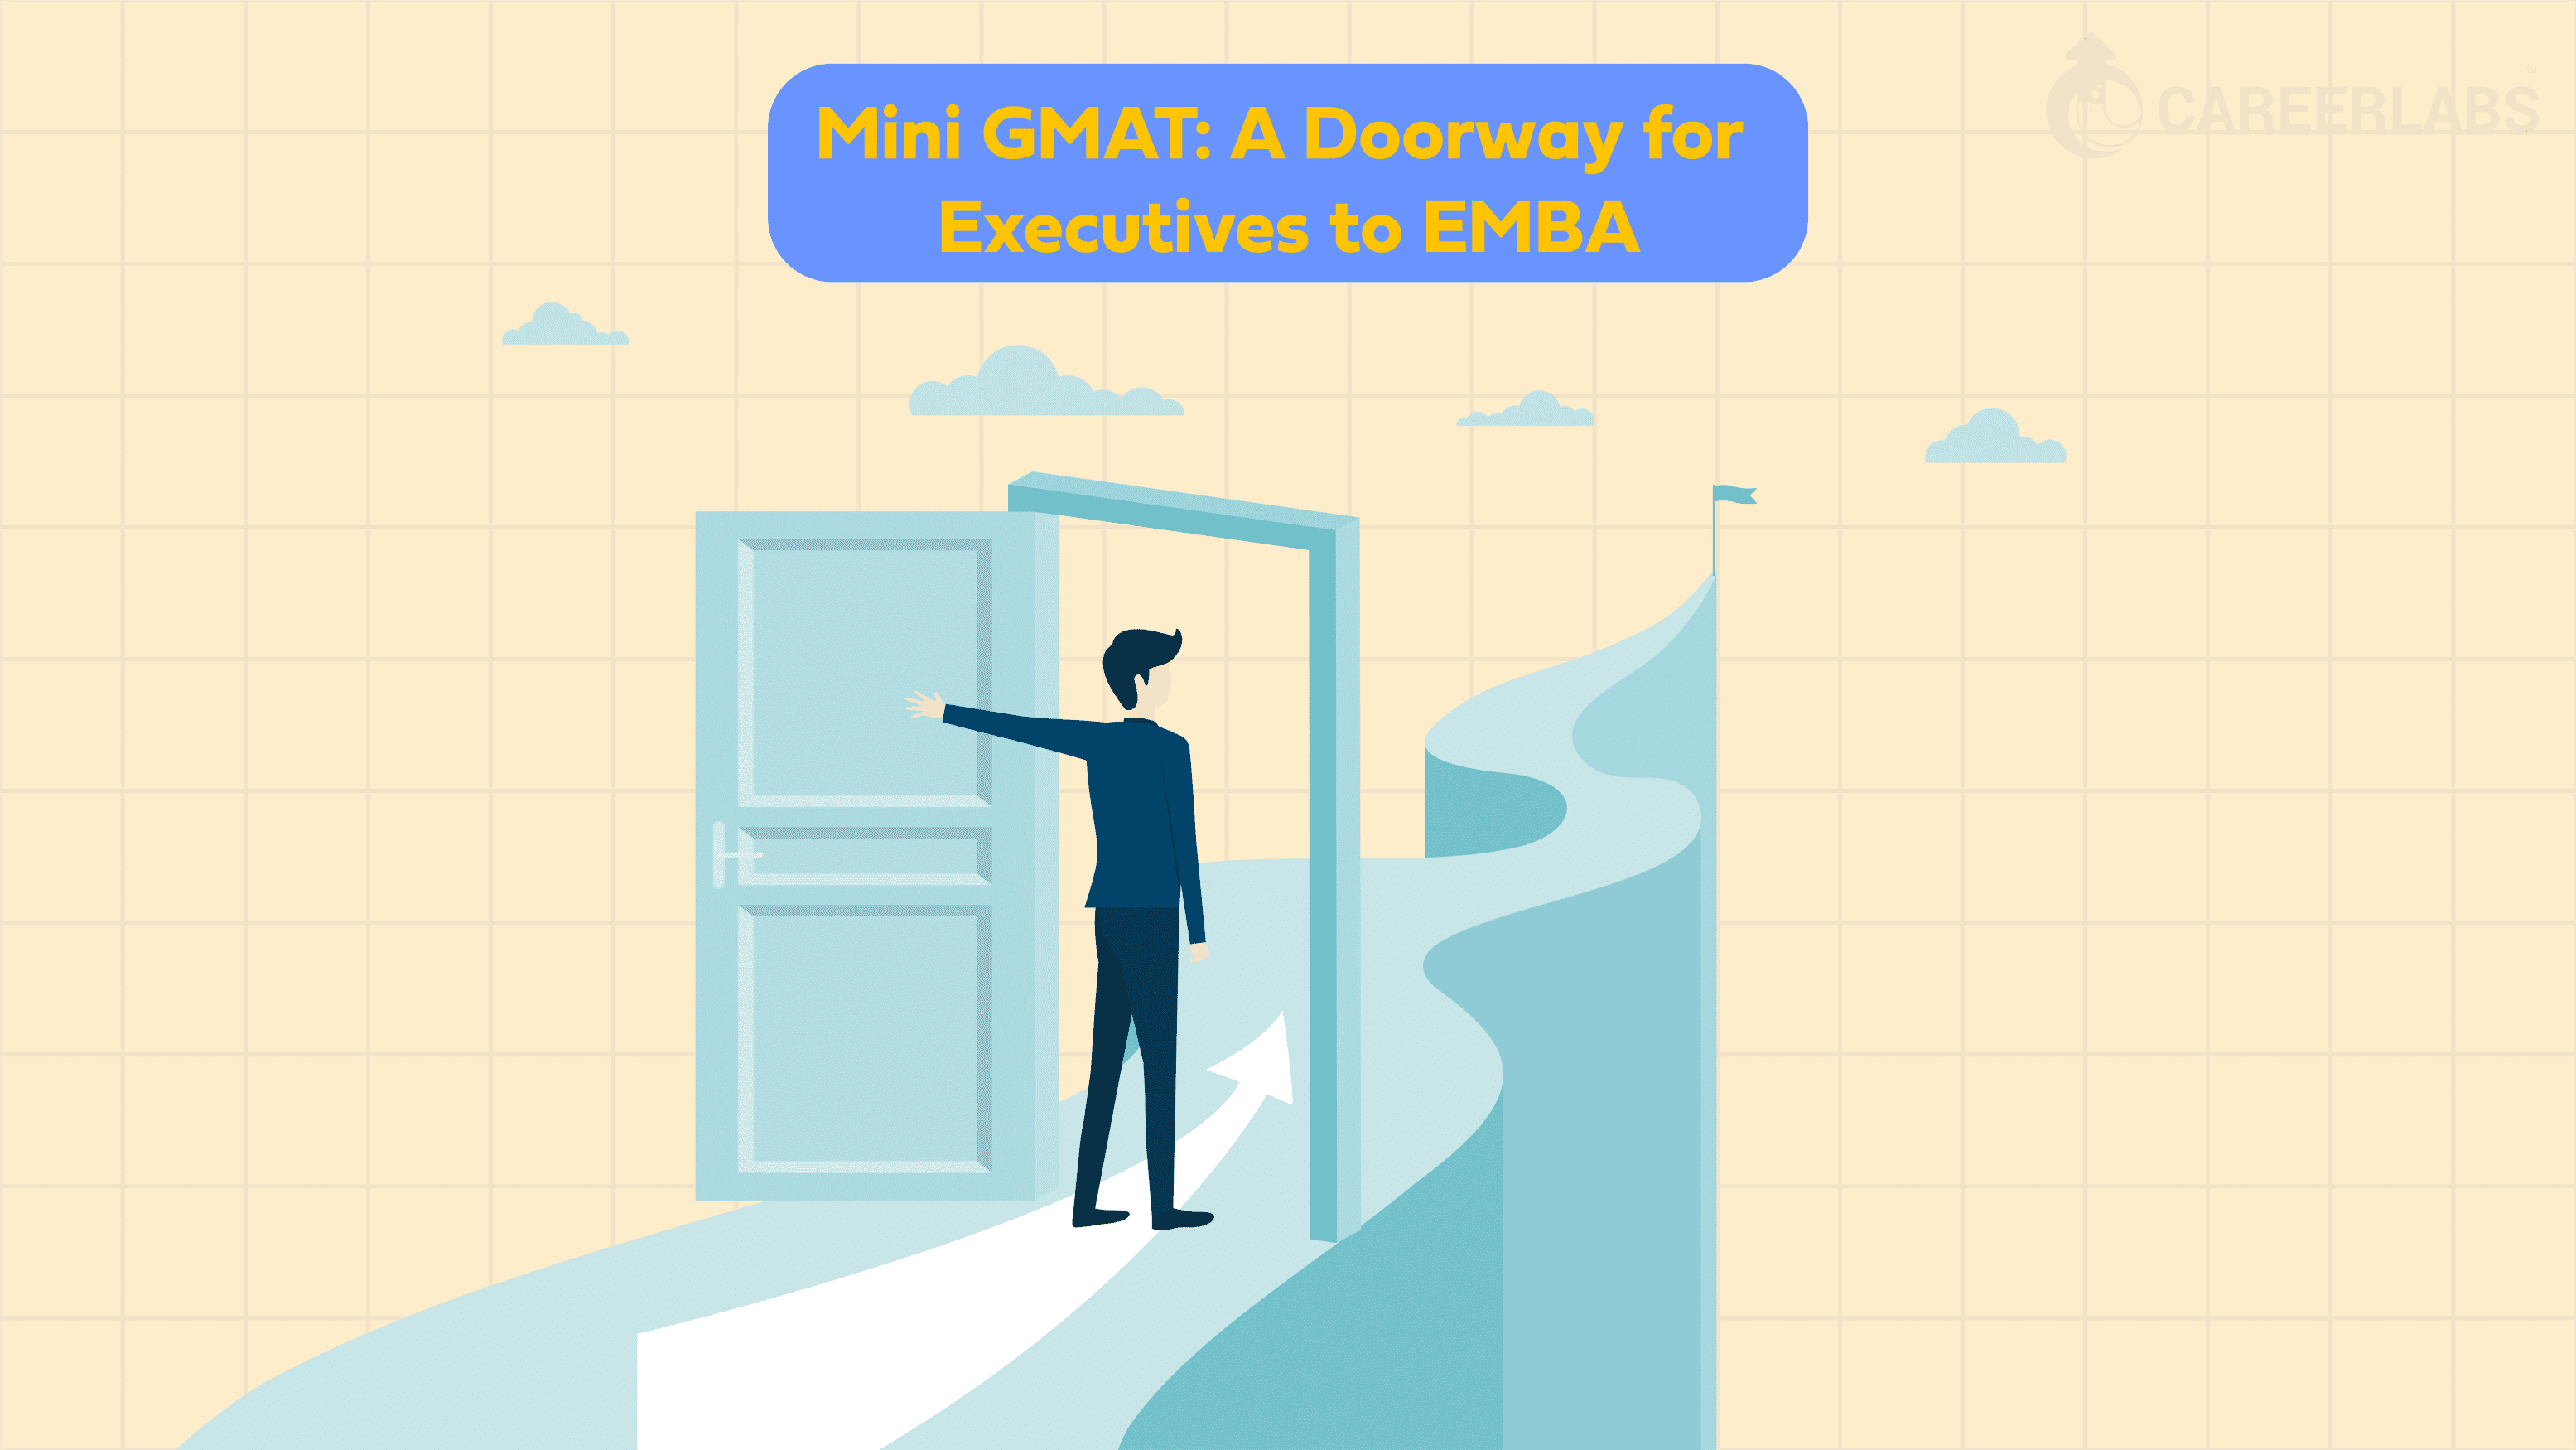 Mini GMAT: A Doorway for Executives to EMBA